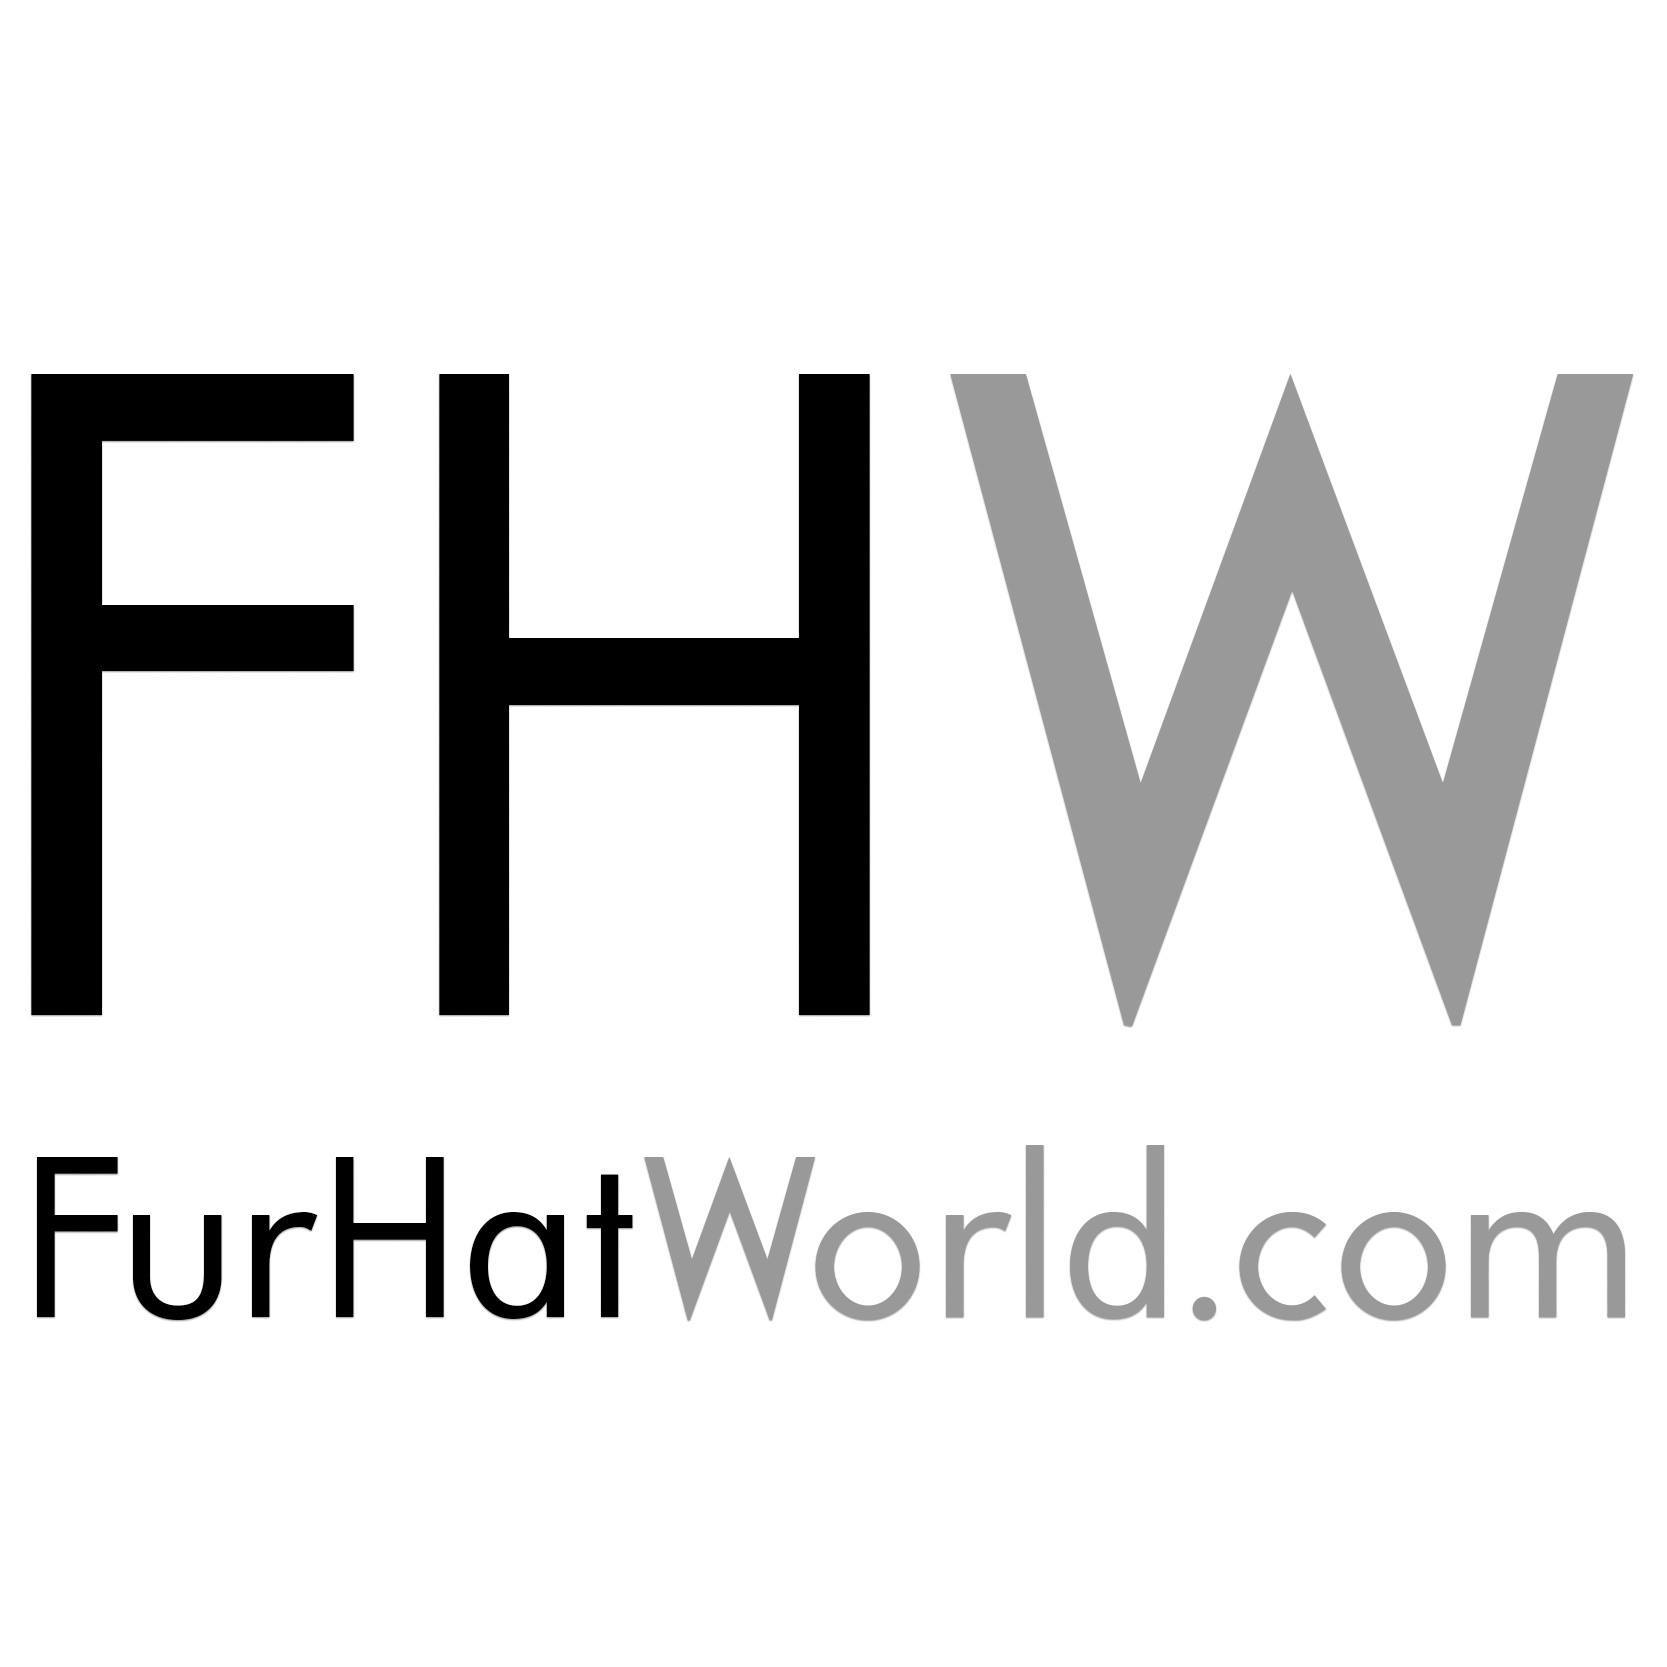 Company logo of Fur Hat World